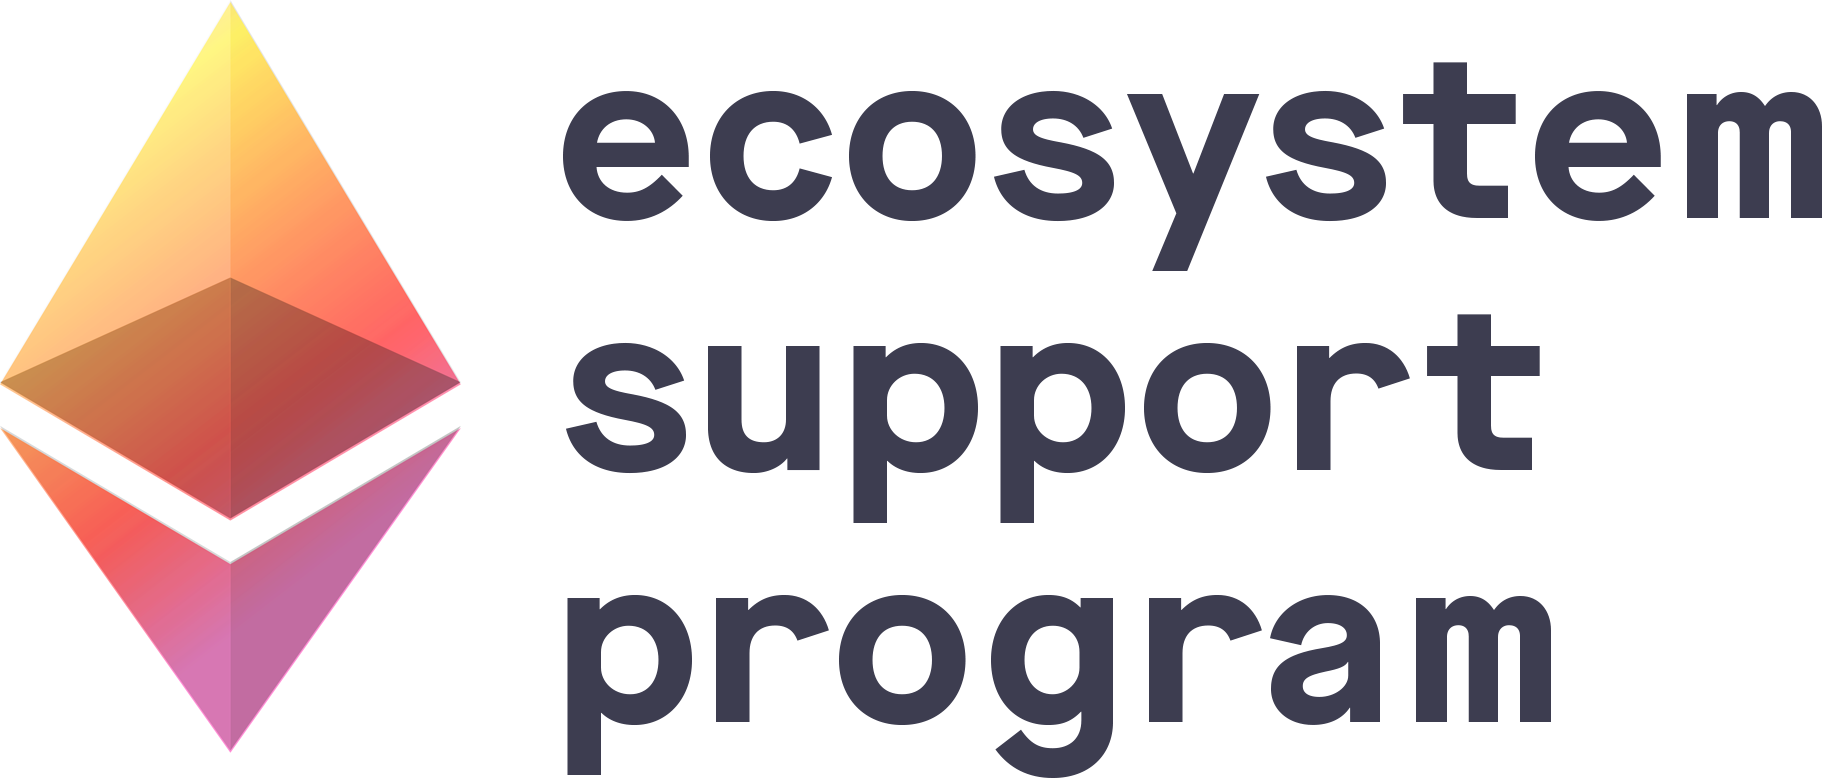 Ecosystem Support Program logo